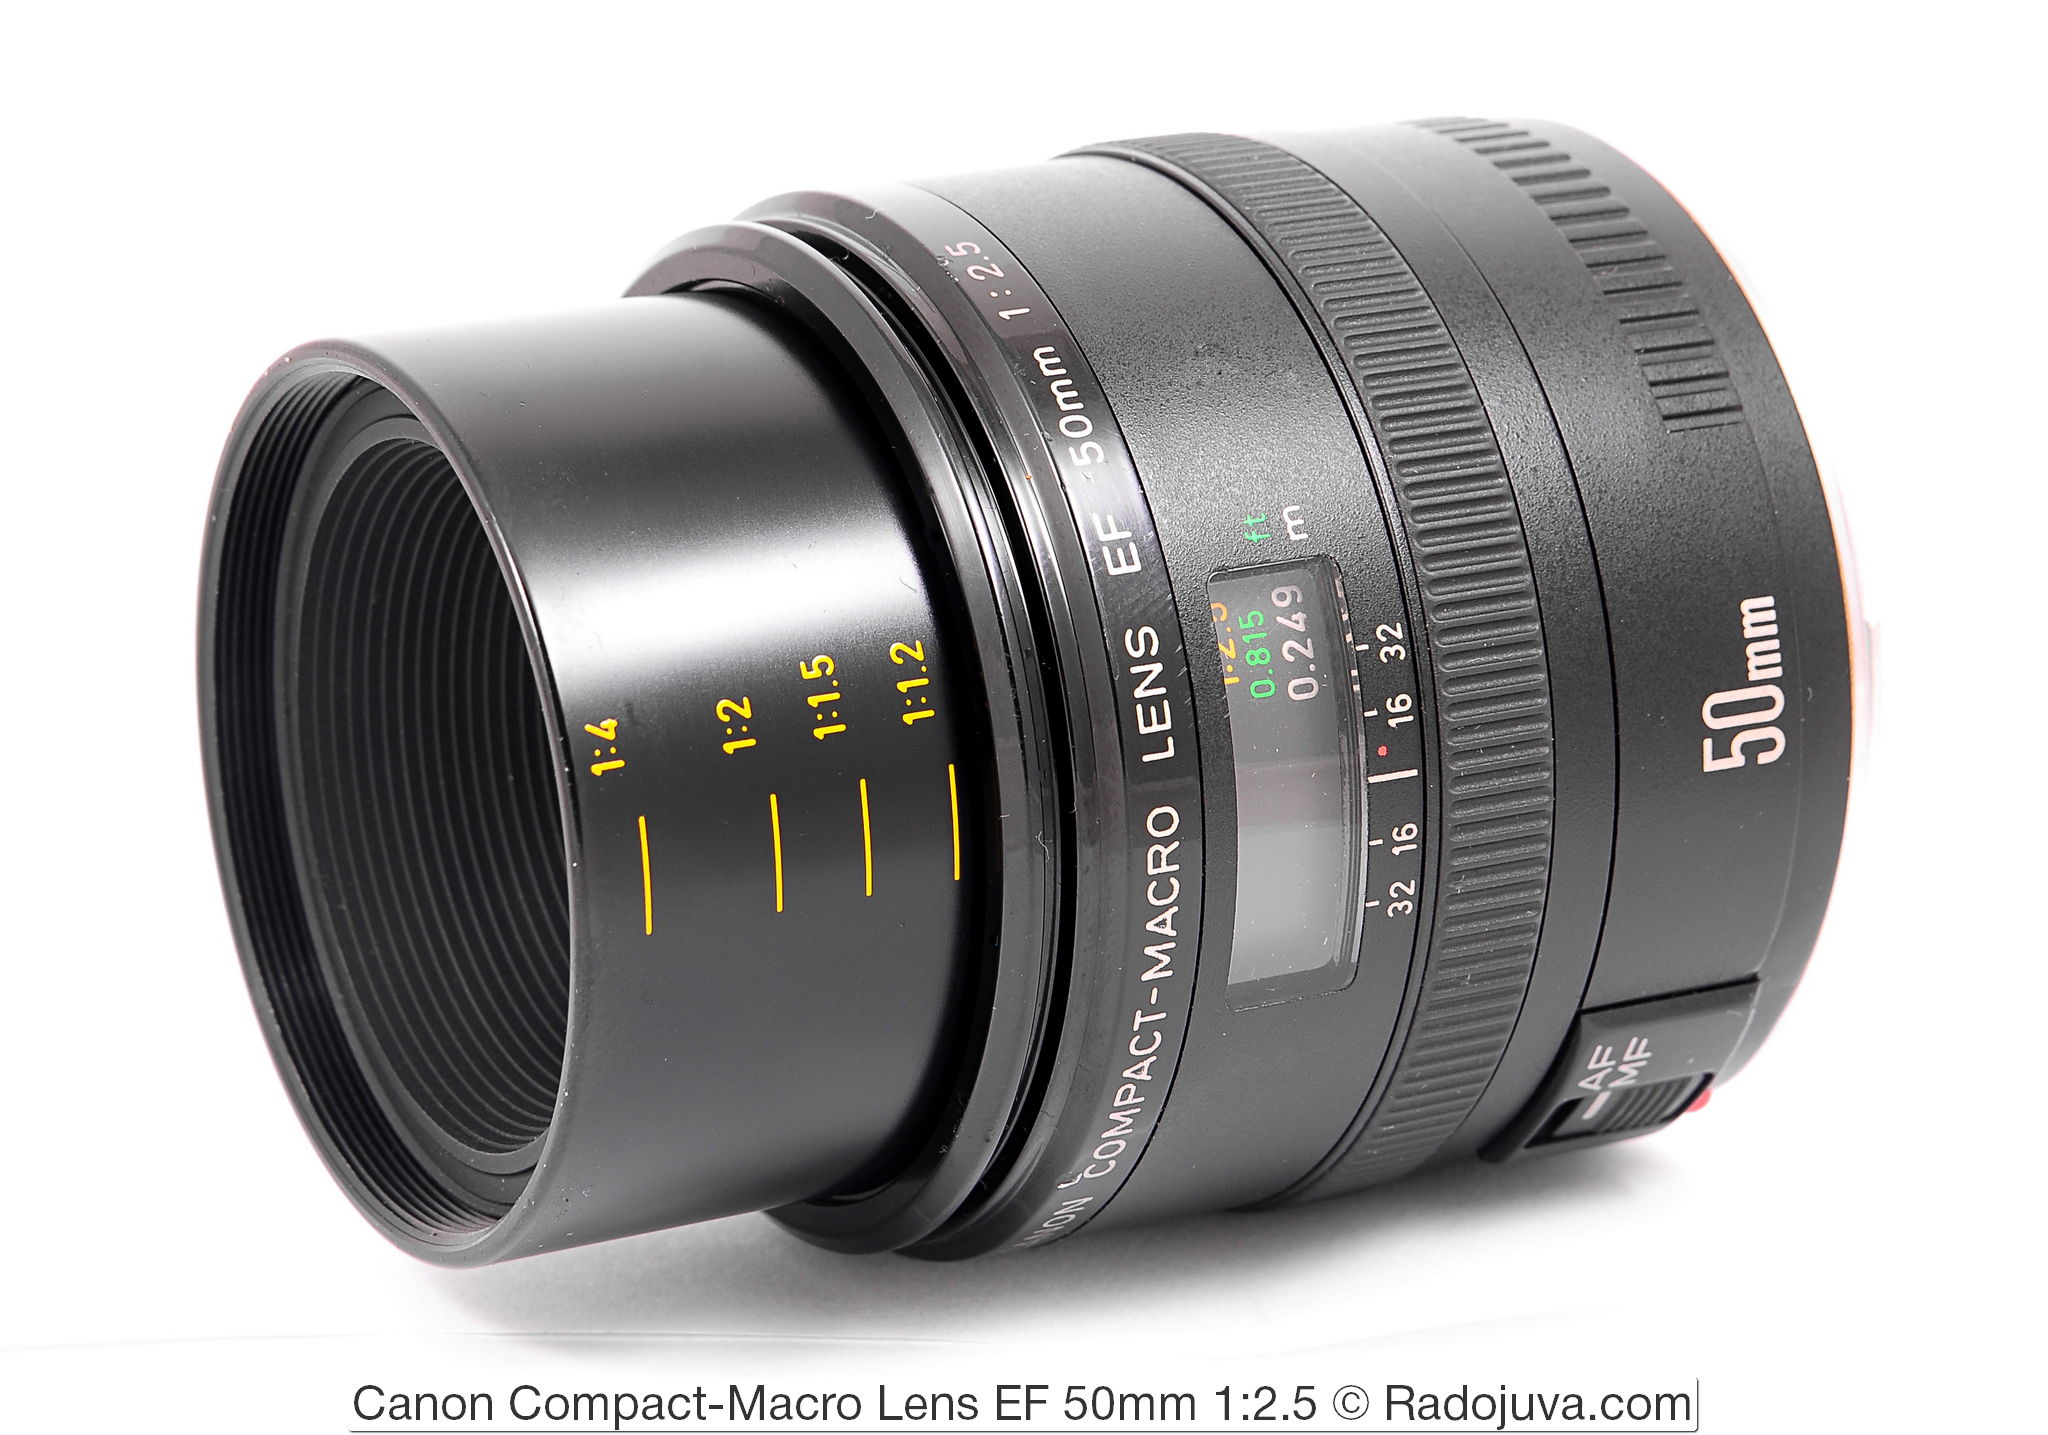 Canon Compact-Macro Lens EF 50mm 1:2.5